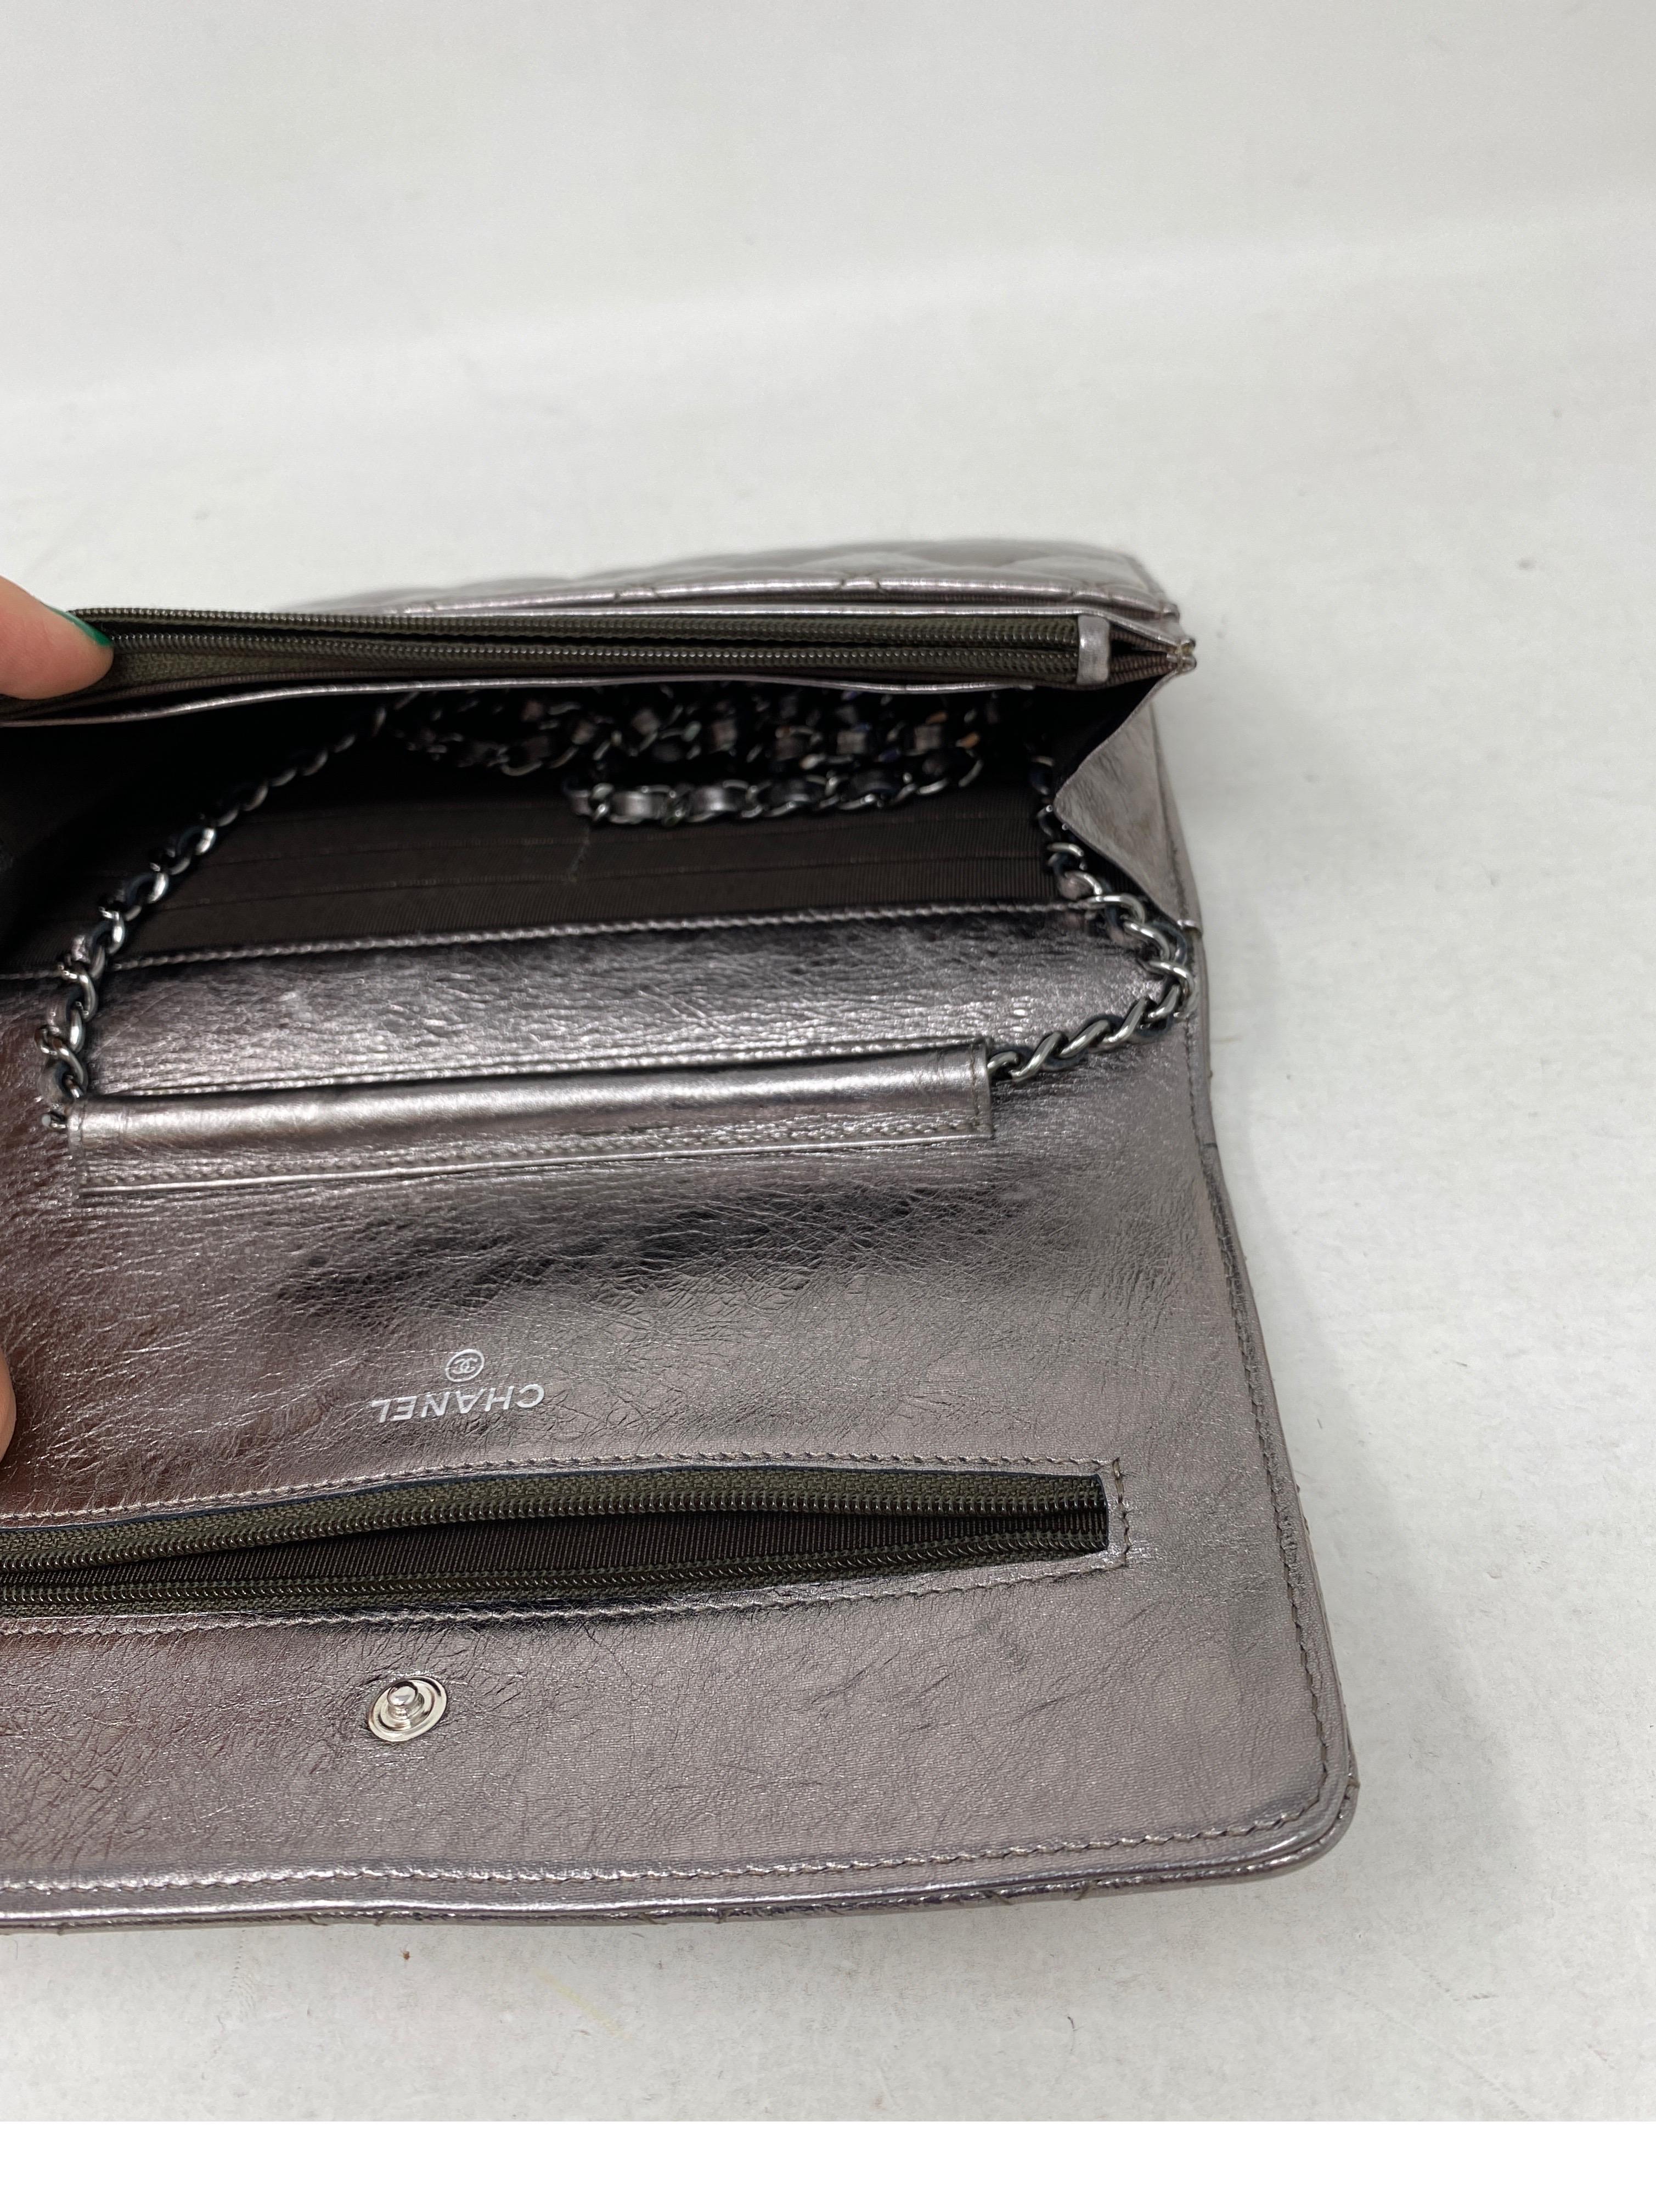 Women's or Men's Chanel Silver Metallic Reissue Wallet On A Chain Bag